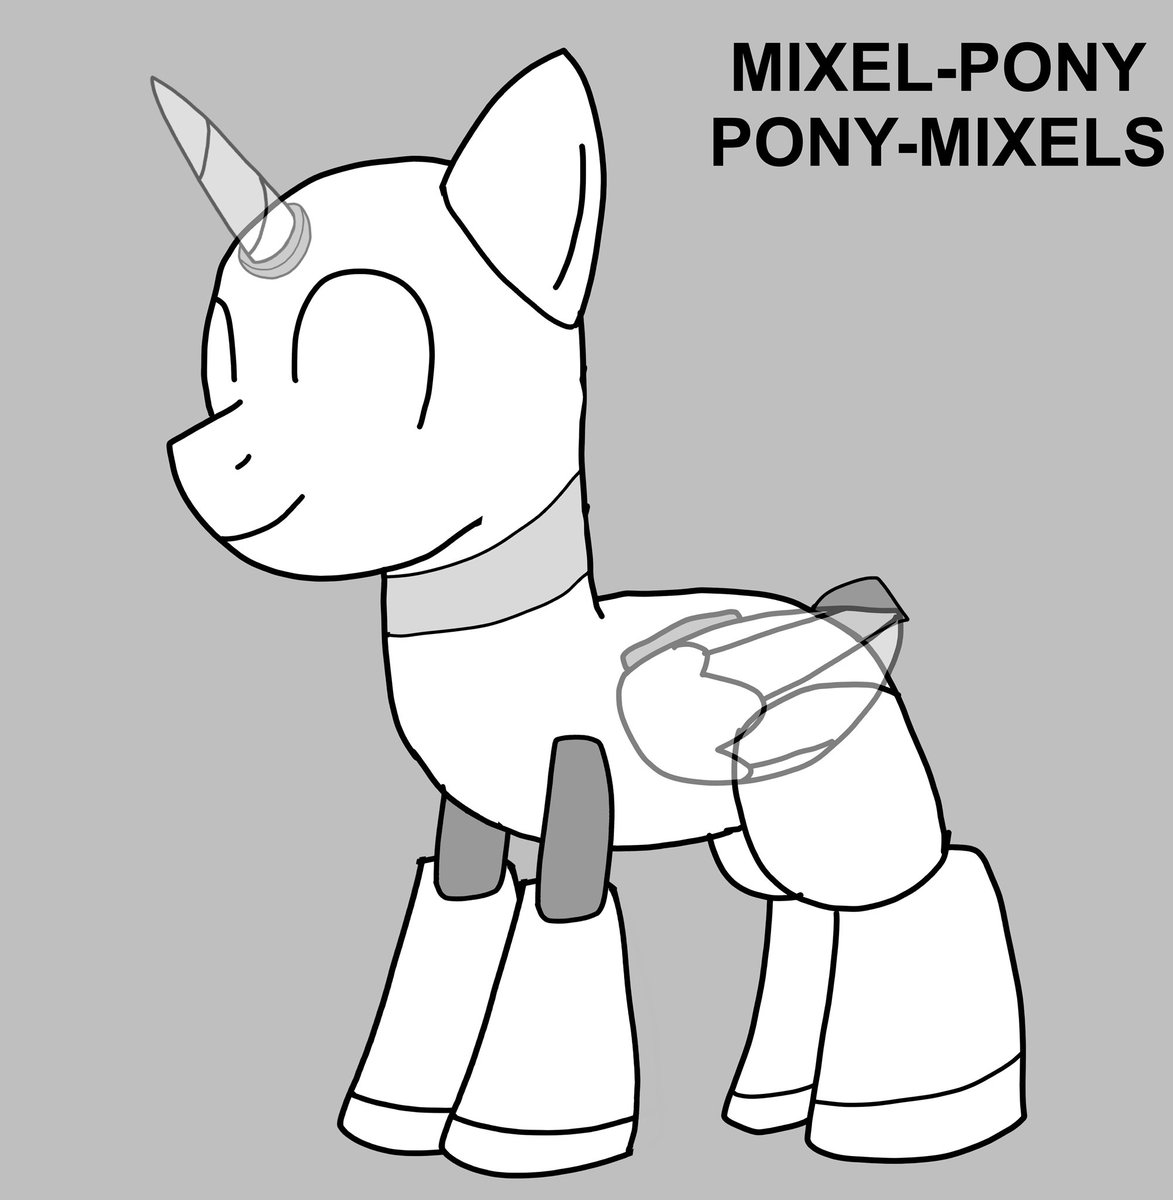 Pony-Mixels

#myart #Mixels #mixelsfanart #mylittlepony #mlp #mylittleponyfanart #mlpart #ArtistOnTwitter